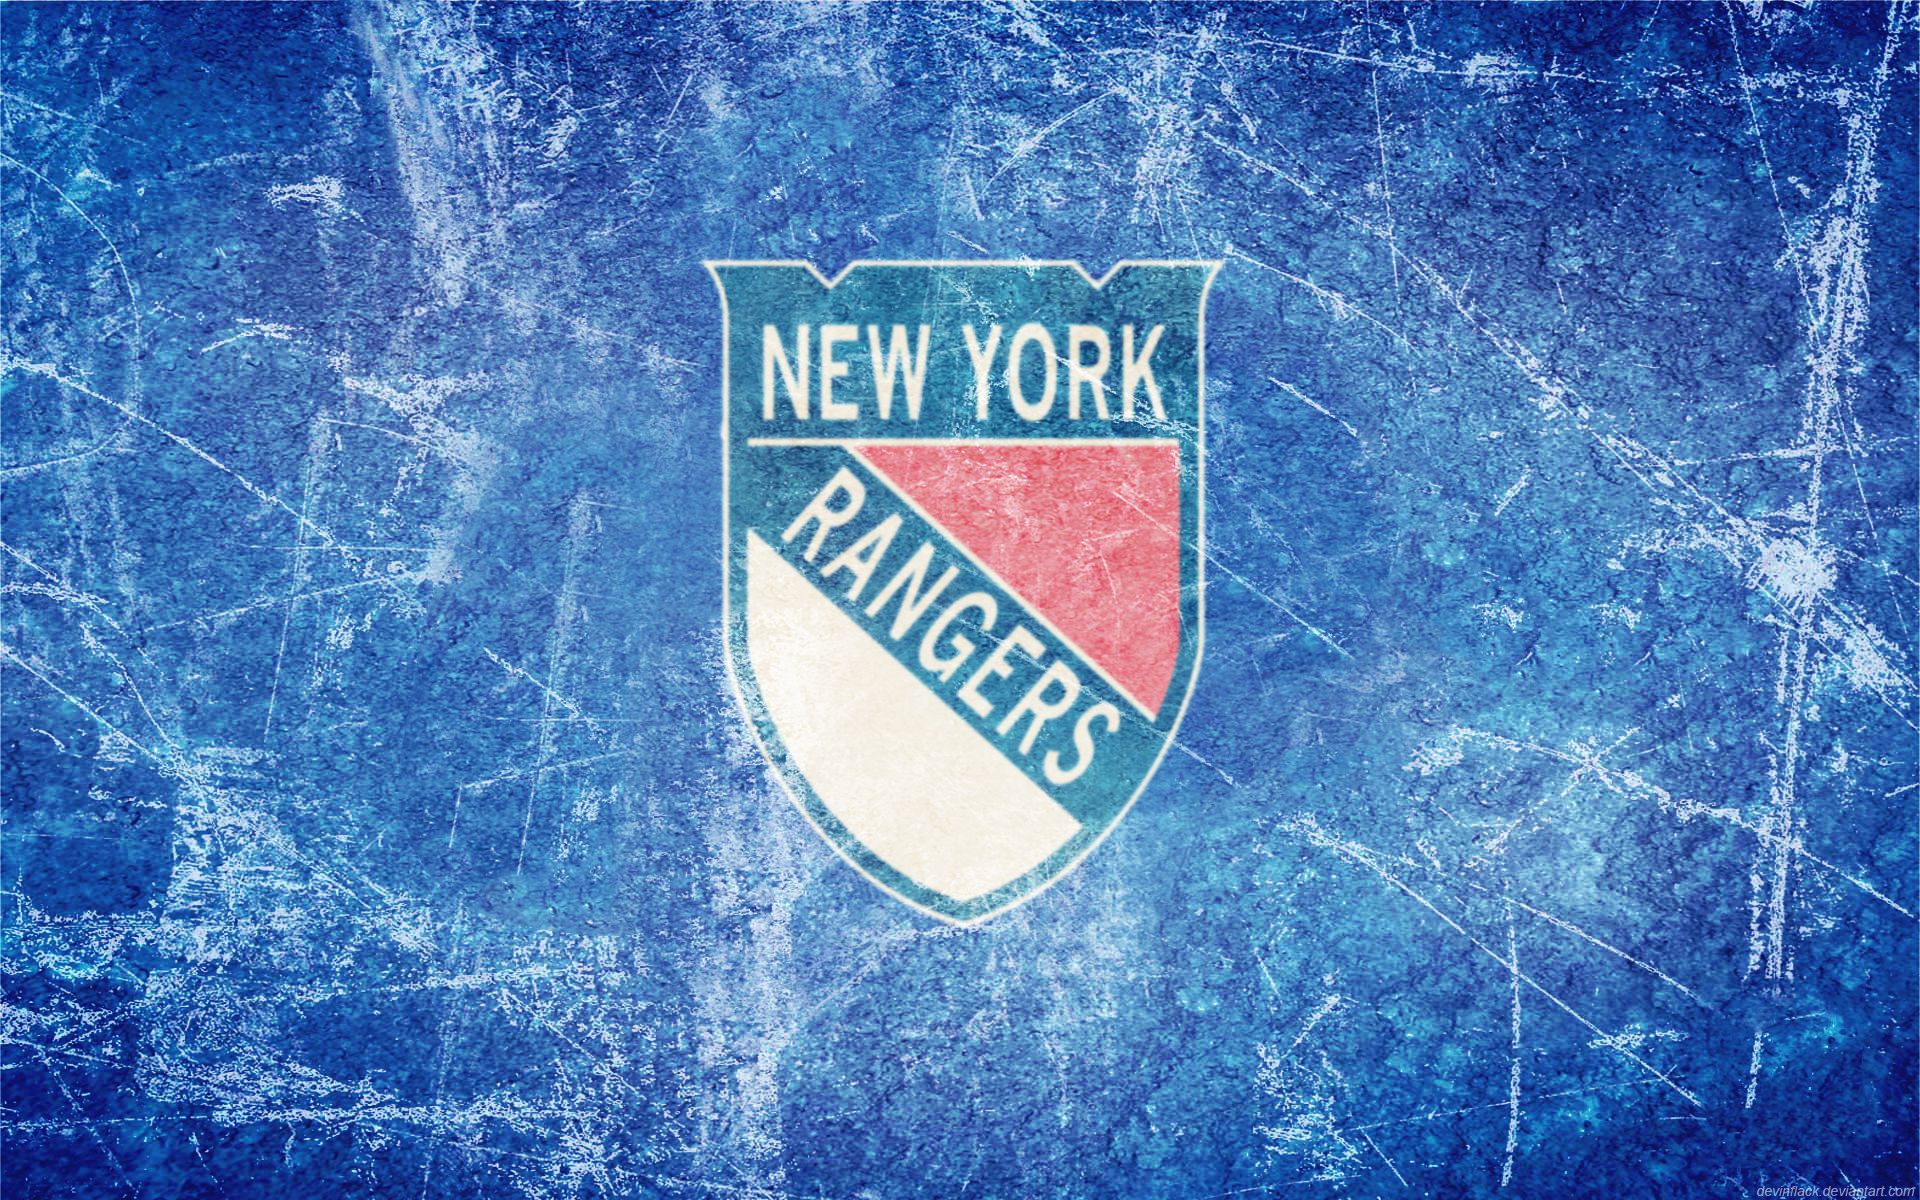 new york rangers, sports, emblem, logo, nhl, hockey